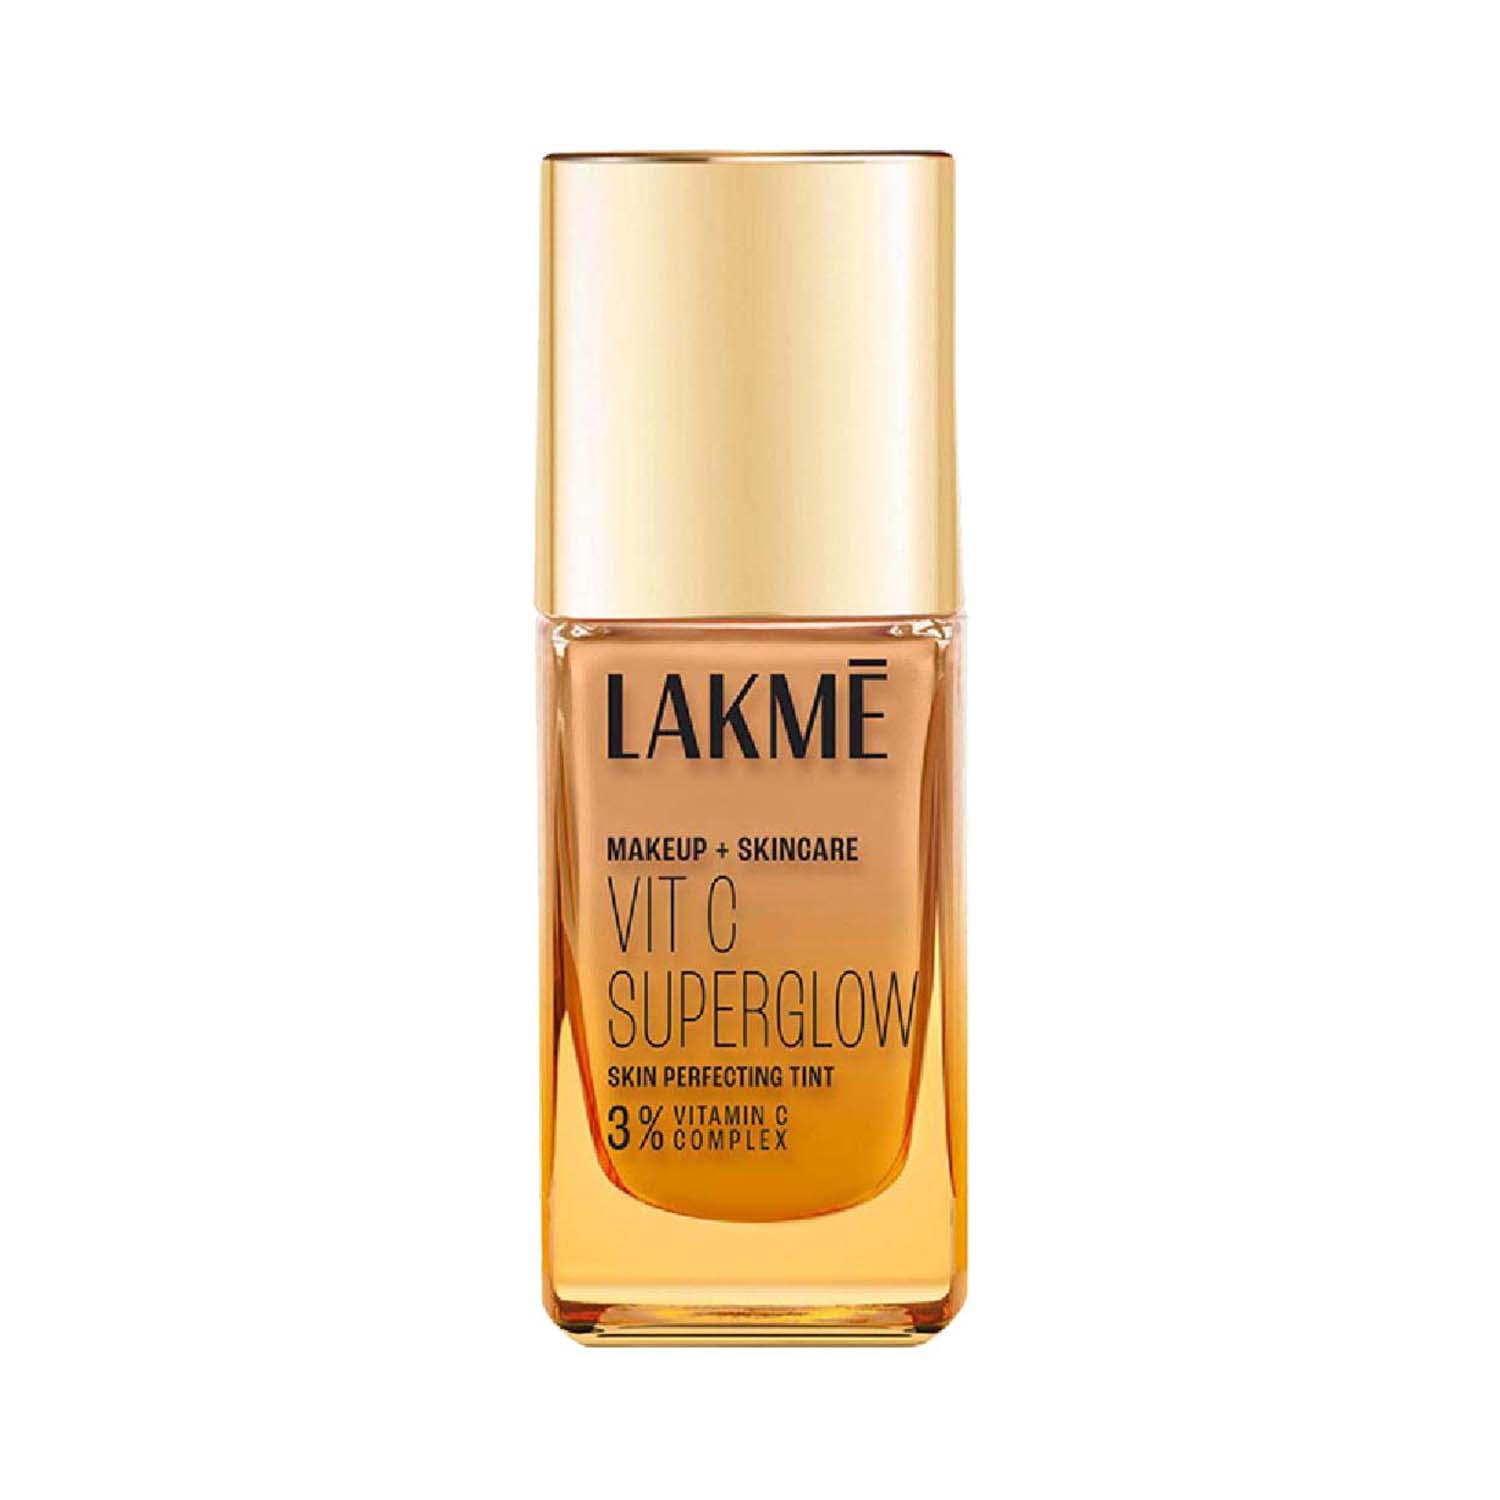 Lakme | Lakme Makeup+Skincare Vit C Superglow Skin Perfecting Tint - Neutral medium N220 (25 ml)